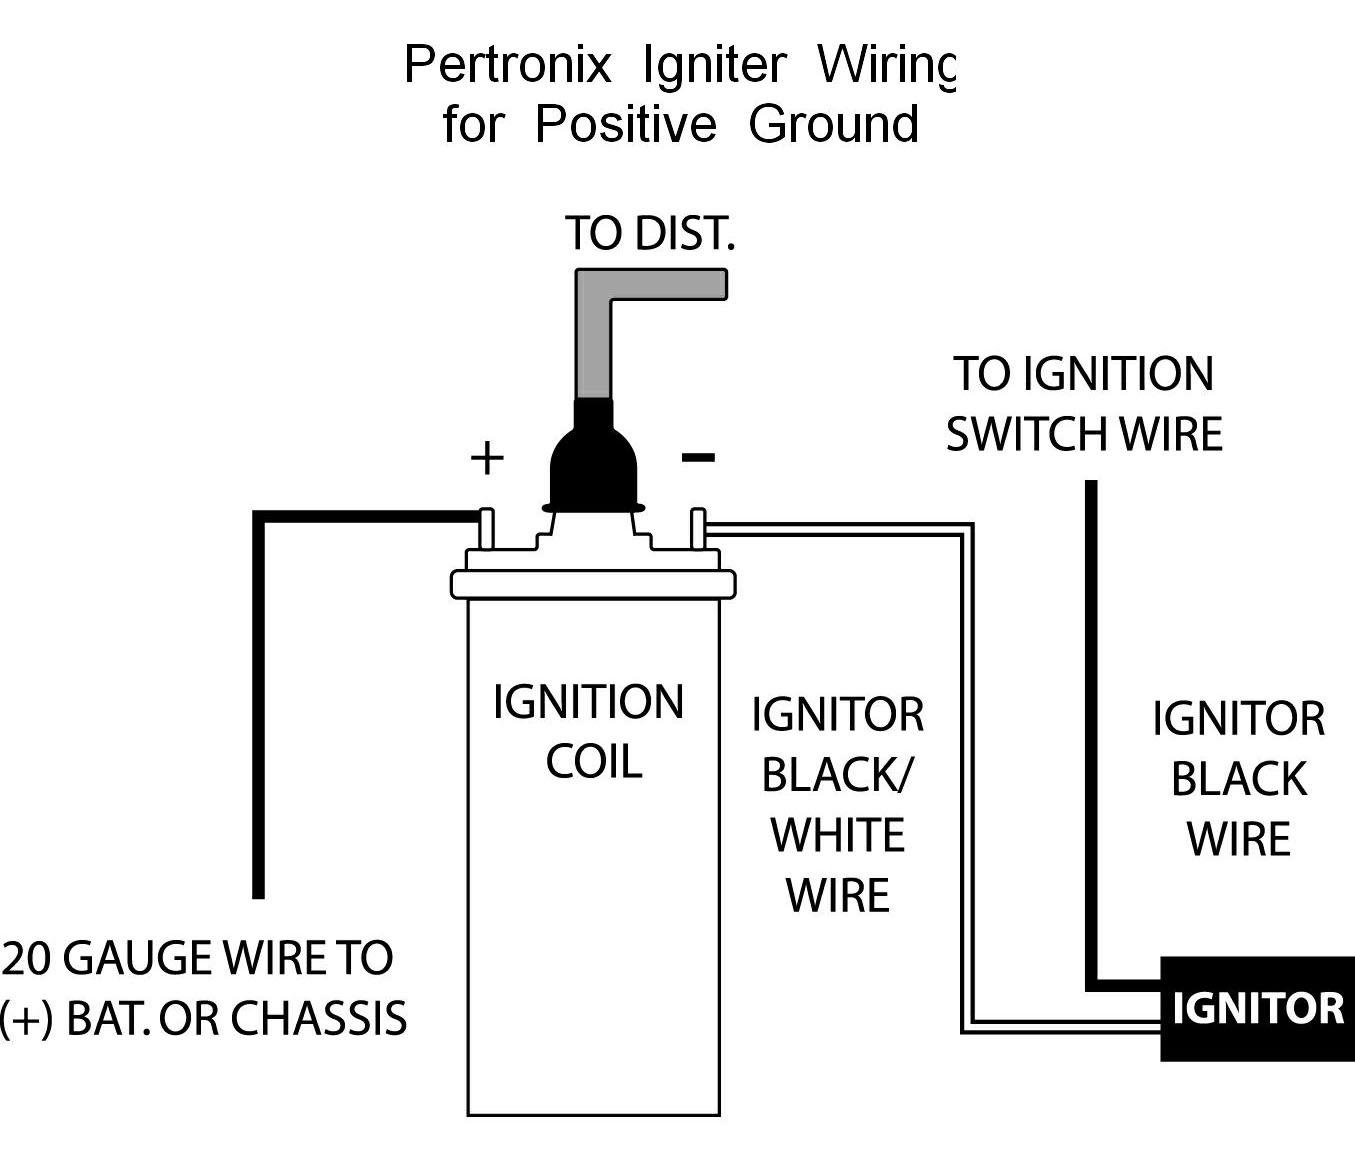 Ignition Coil Circuit Diagram | Wiring Diagram - Ignition Coil Wiring Diagram